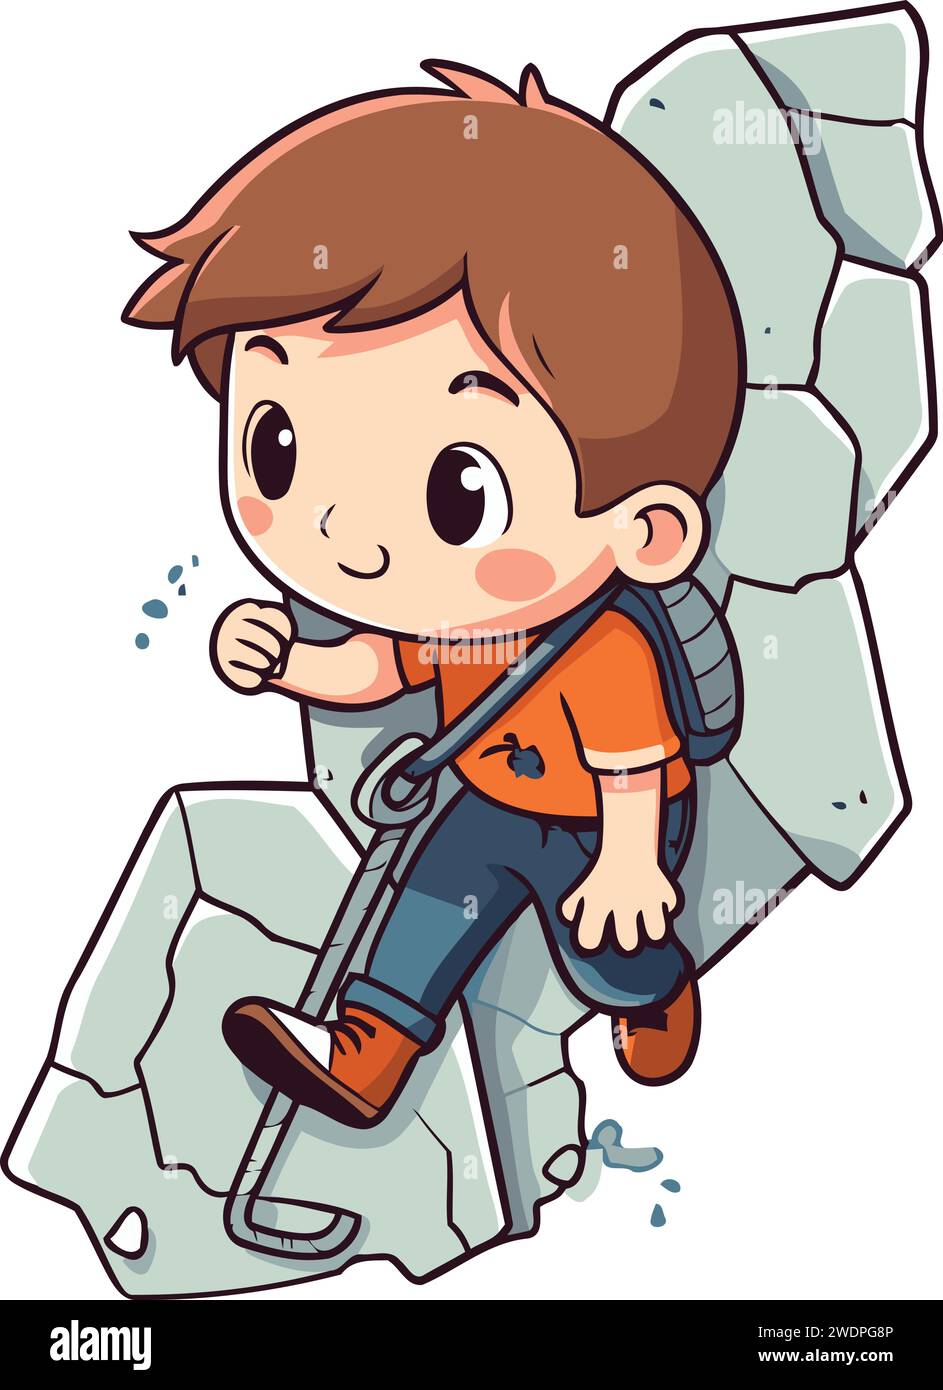 Boy climbing on the rock. Vector illustration of a child climbing on a rock. Stock Vector